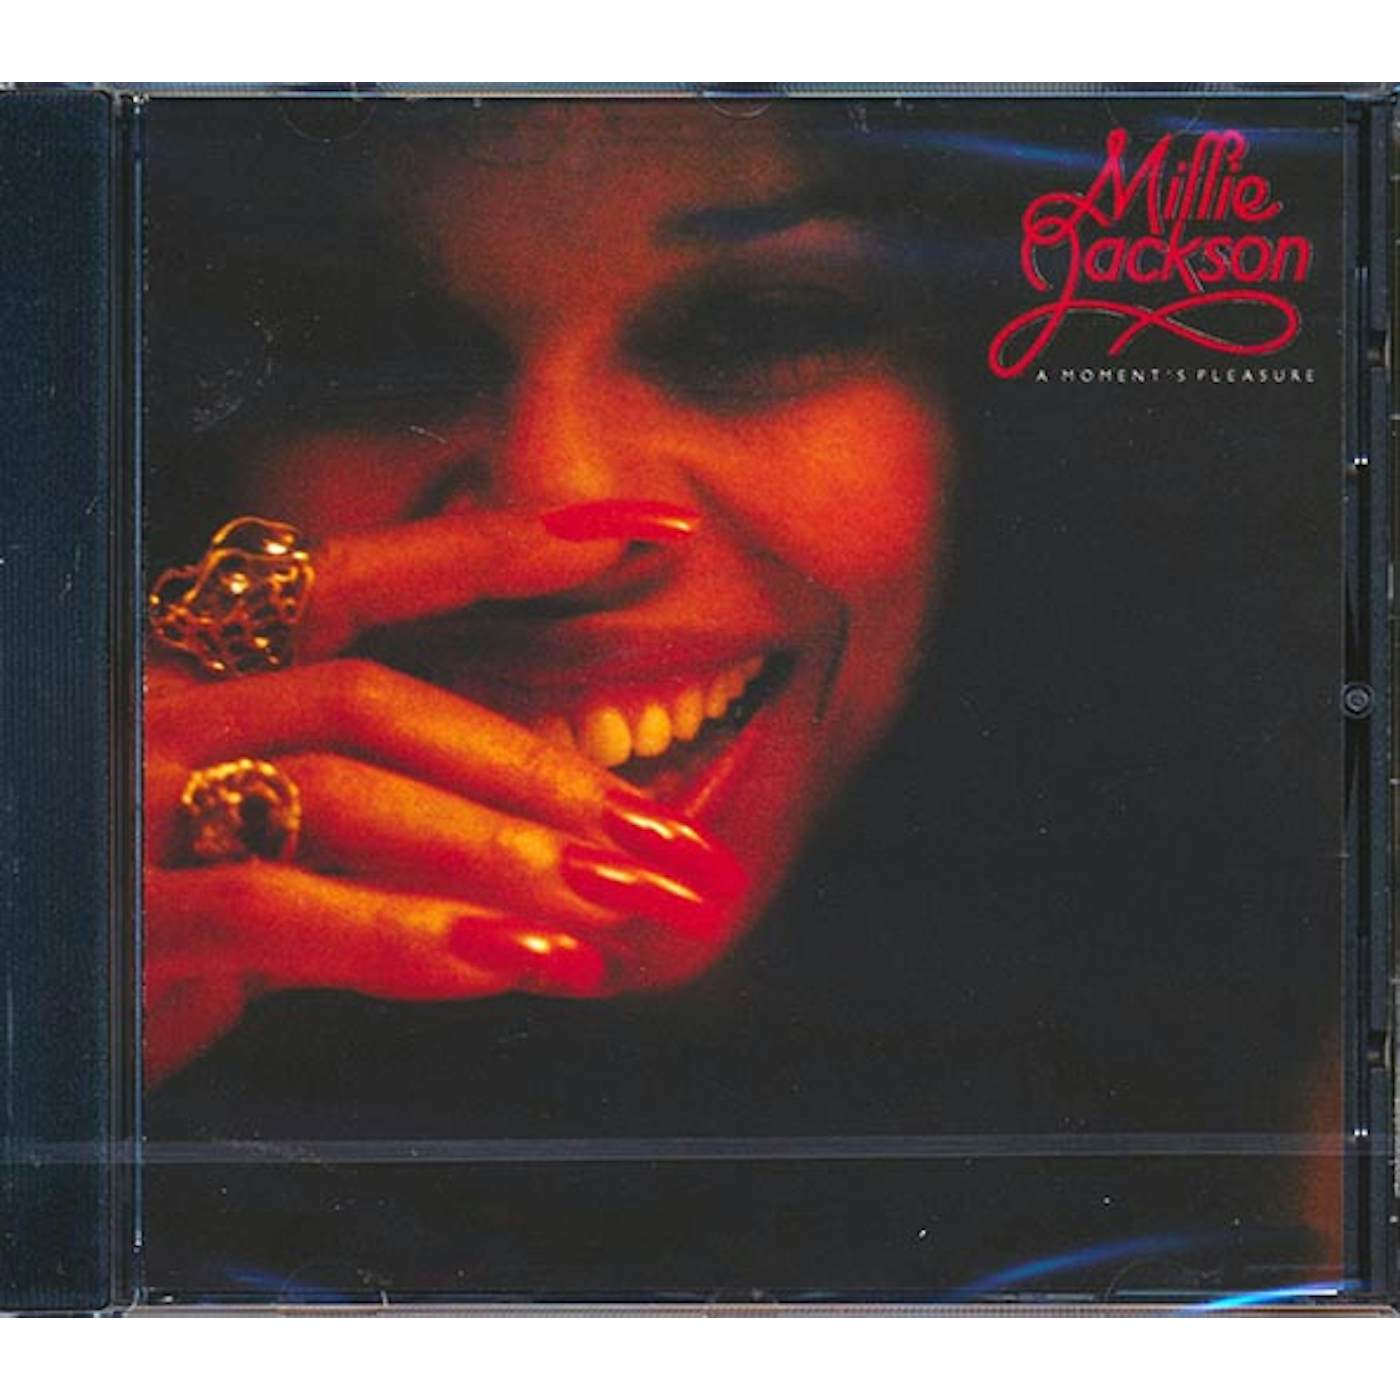 Millie Jackson  CD -  A Moment's Pleasure